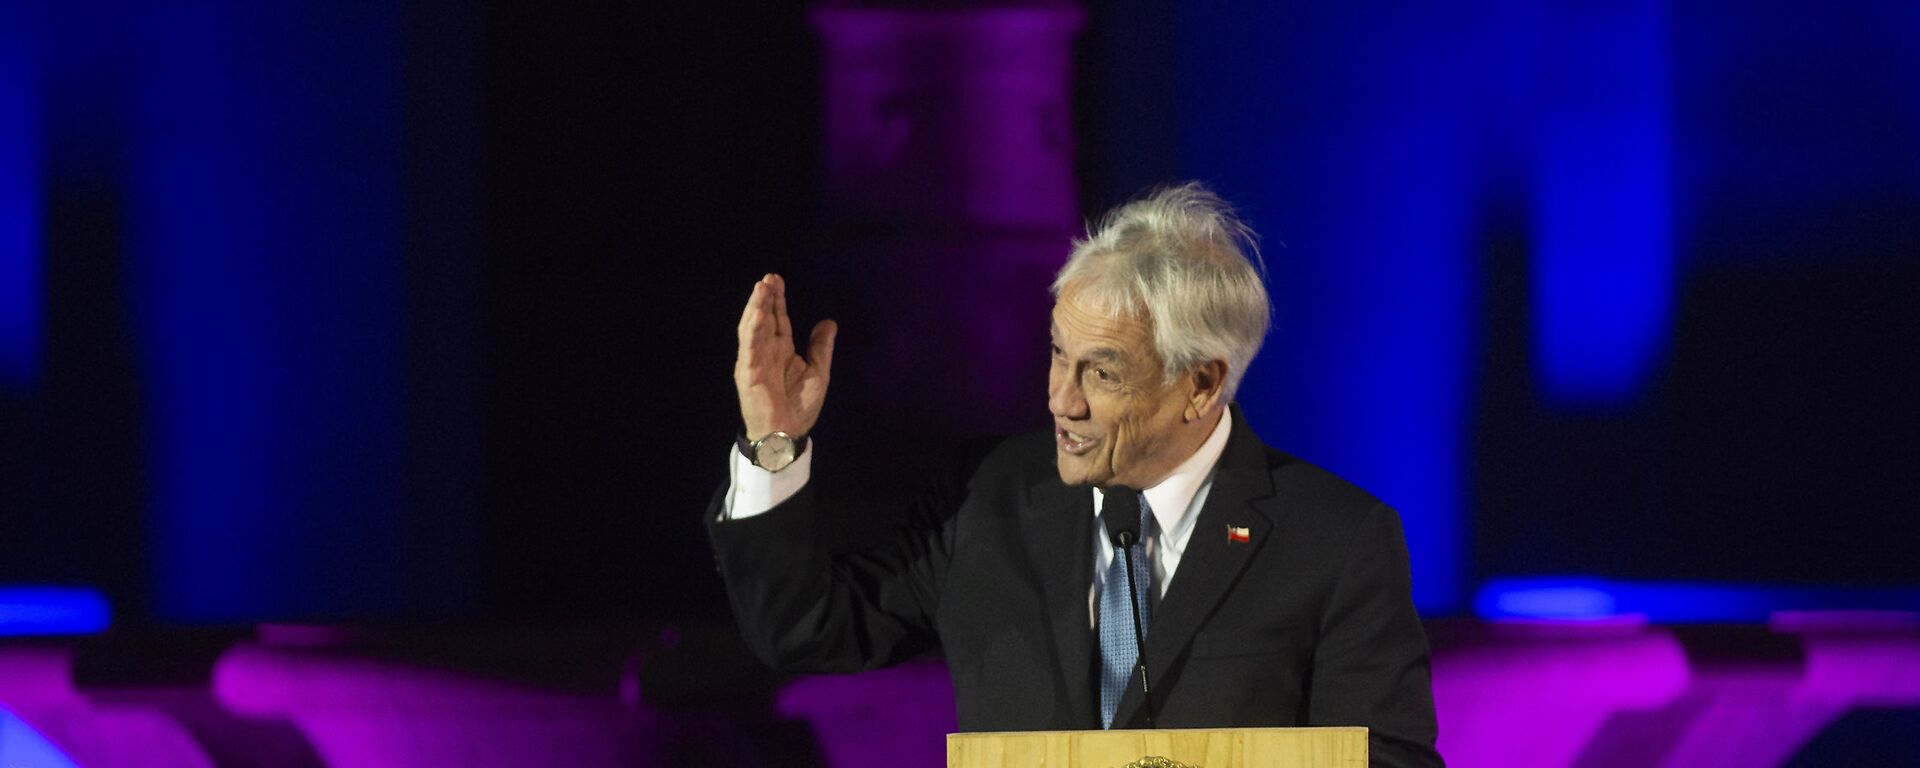 Sebastián Piñera, presidente de Chile - Sputnik Mundo, 1920, 08.06.2019